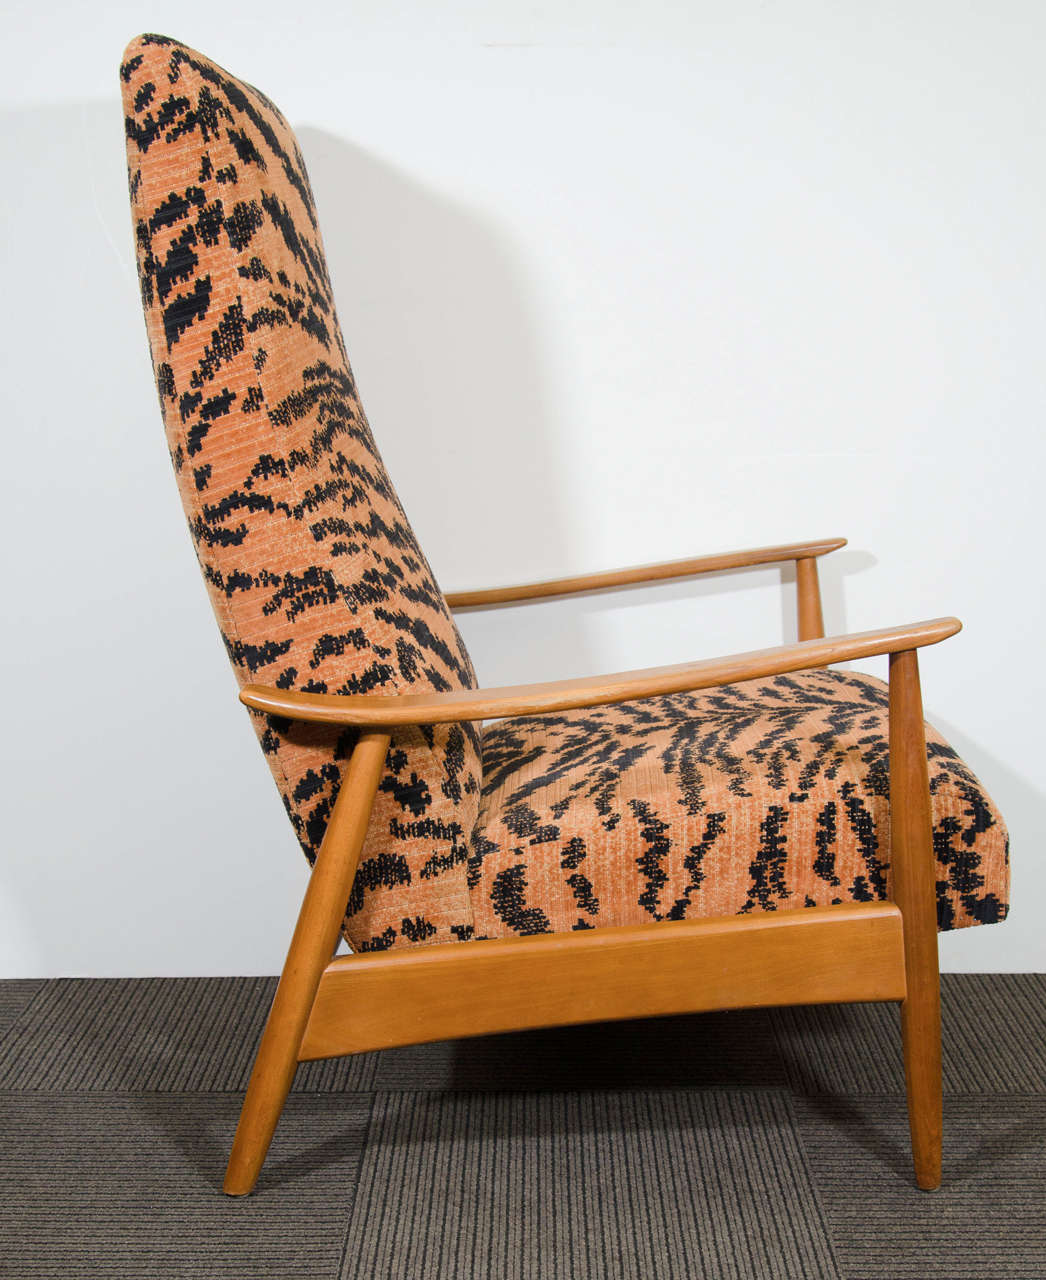 American Midcentury Teak Recliner with Tiger Velvet Upholstery by Milo Baughman